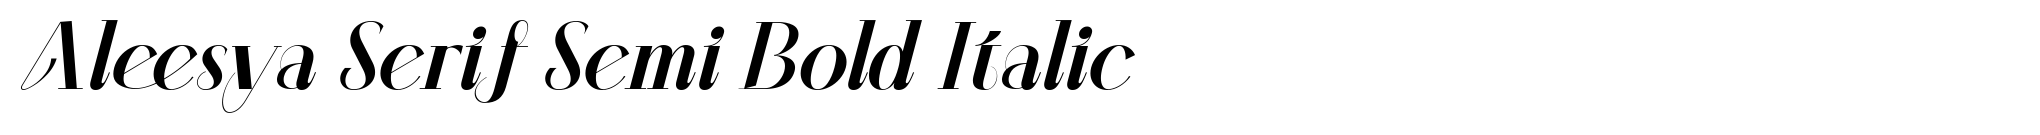 Aleesya Serif Semi Bold Italic image